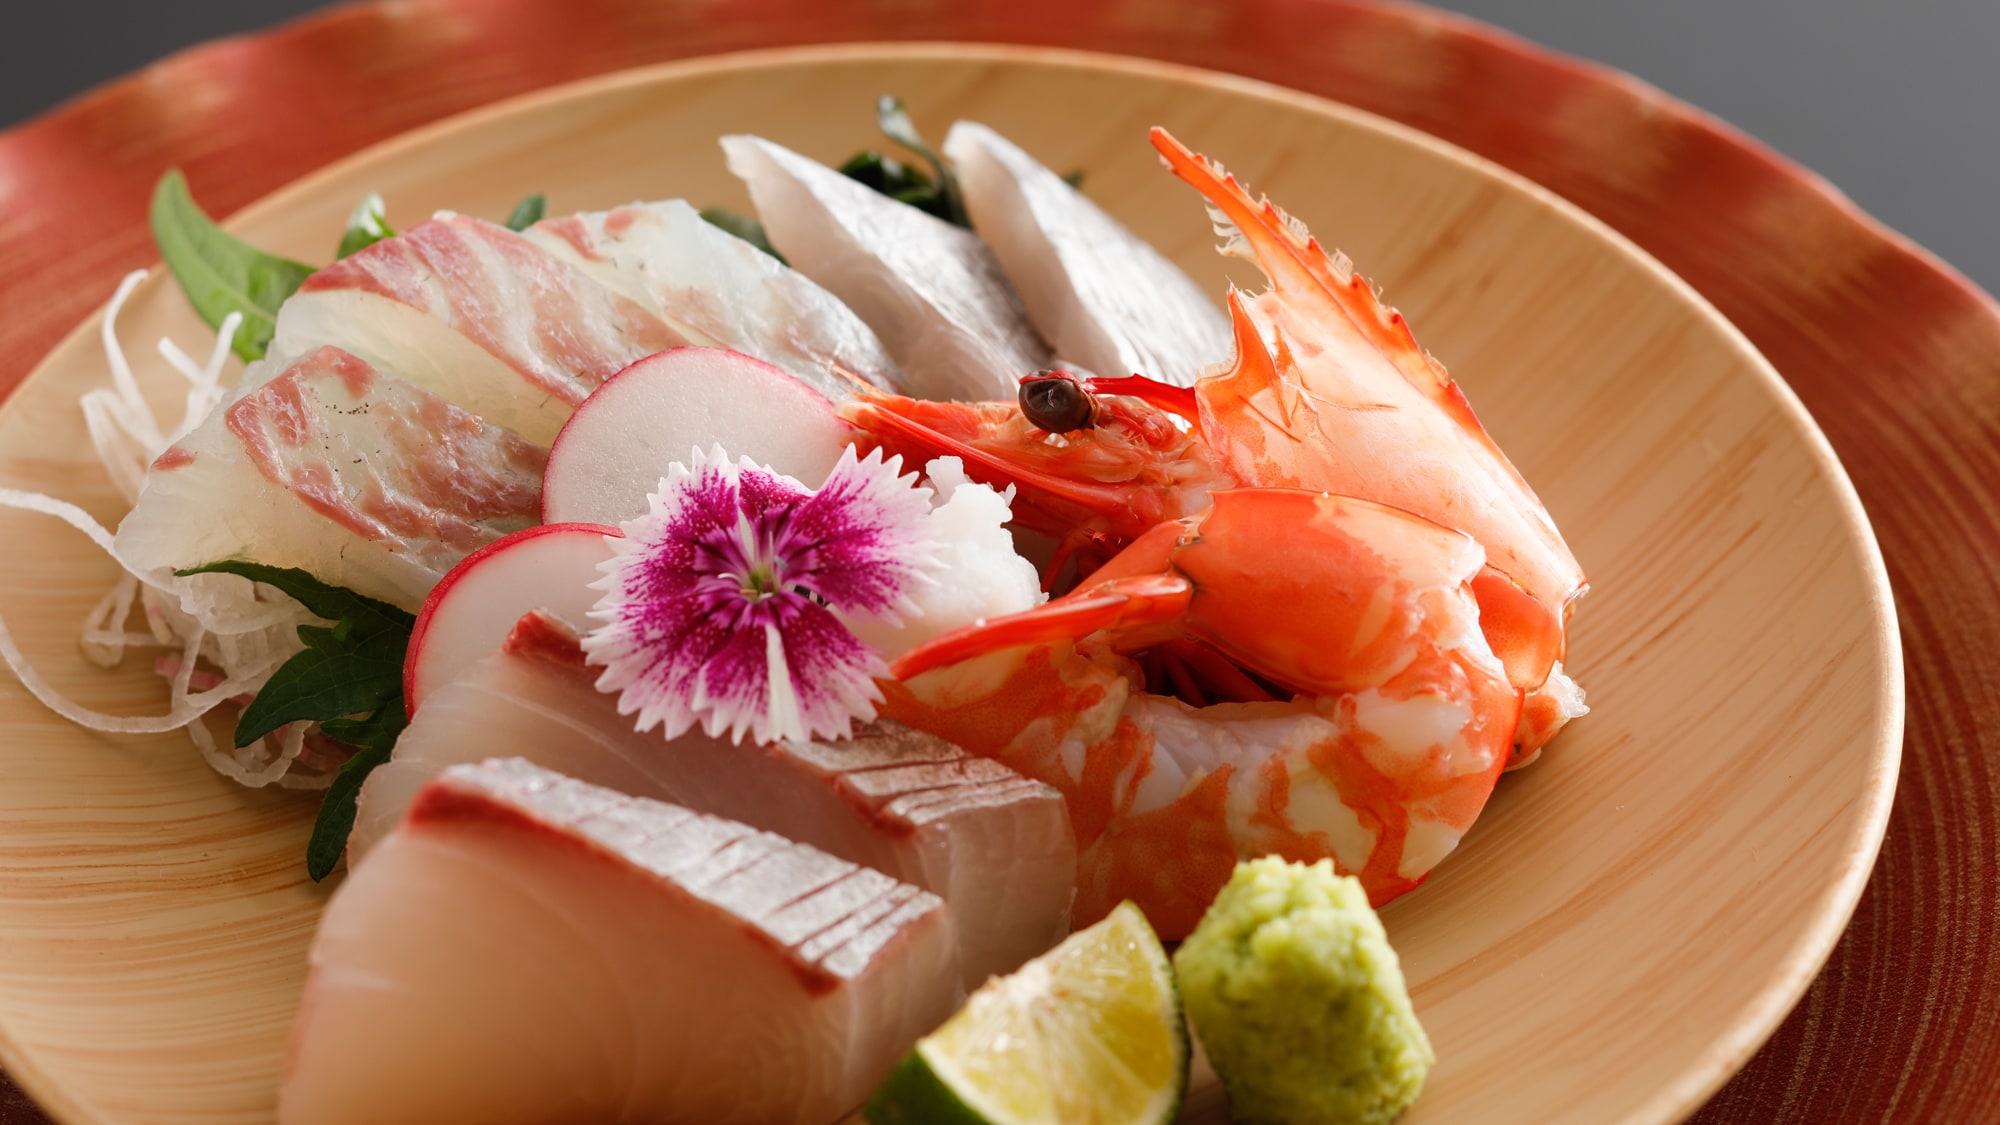 [Sashimi] A gift of the abundant sea that arrives in each season. (image)